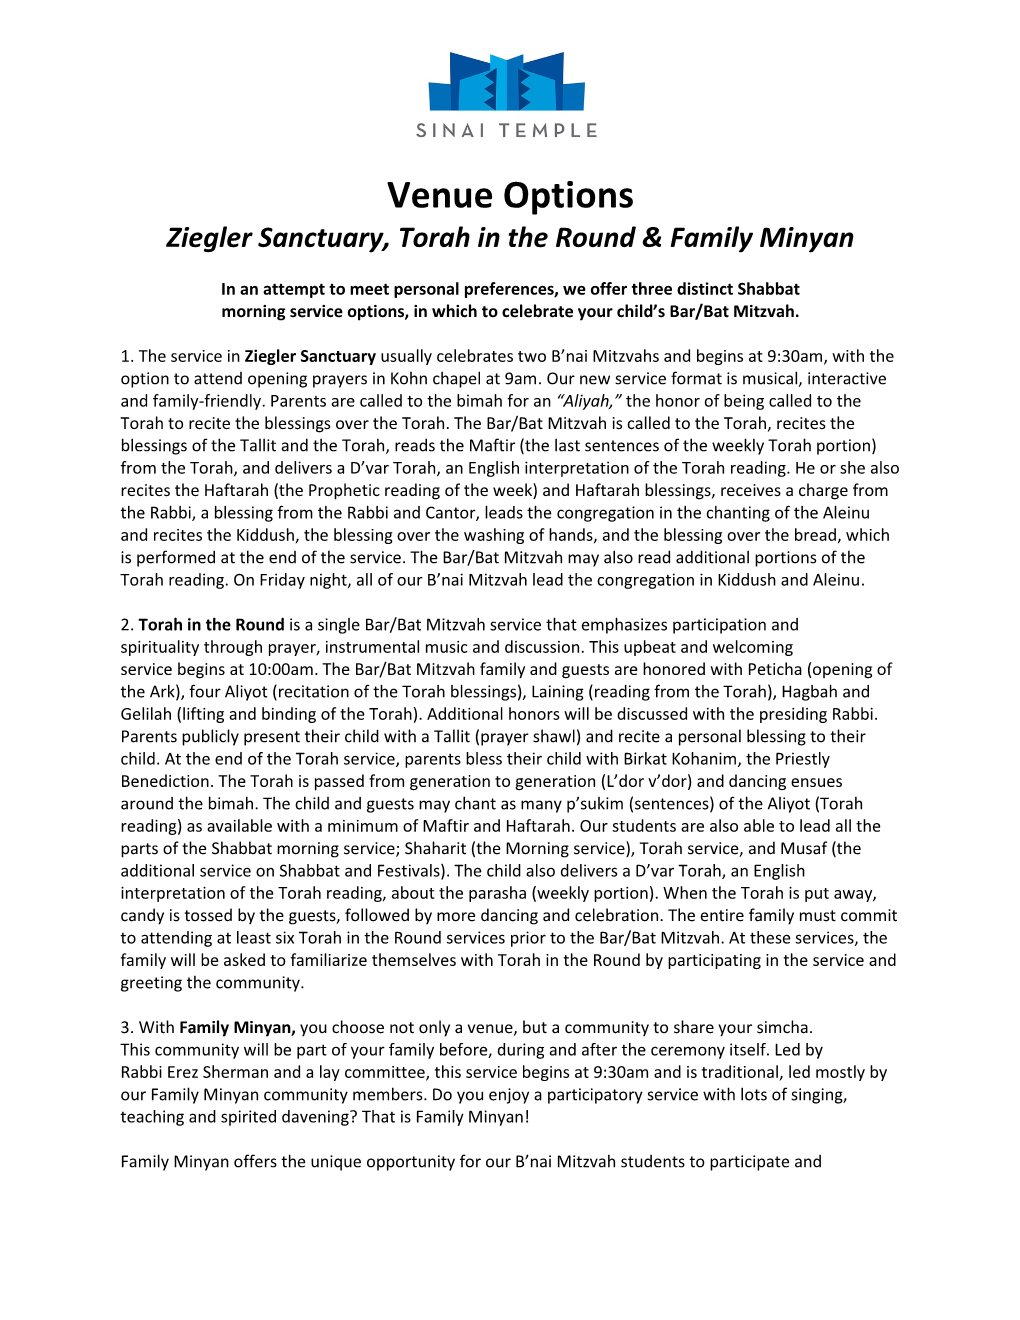 Venue Options Ziegler Sanctuary, Torah in the Round & Family Minyan